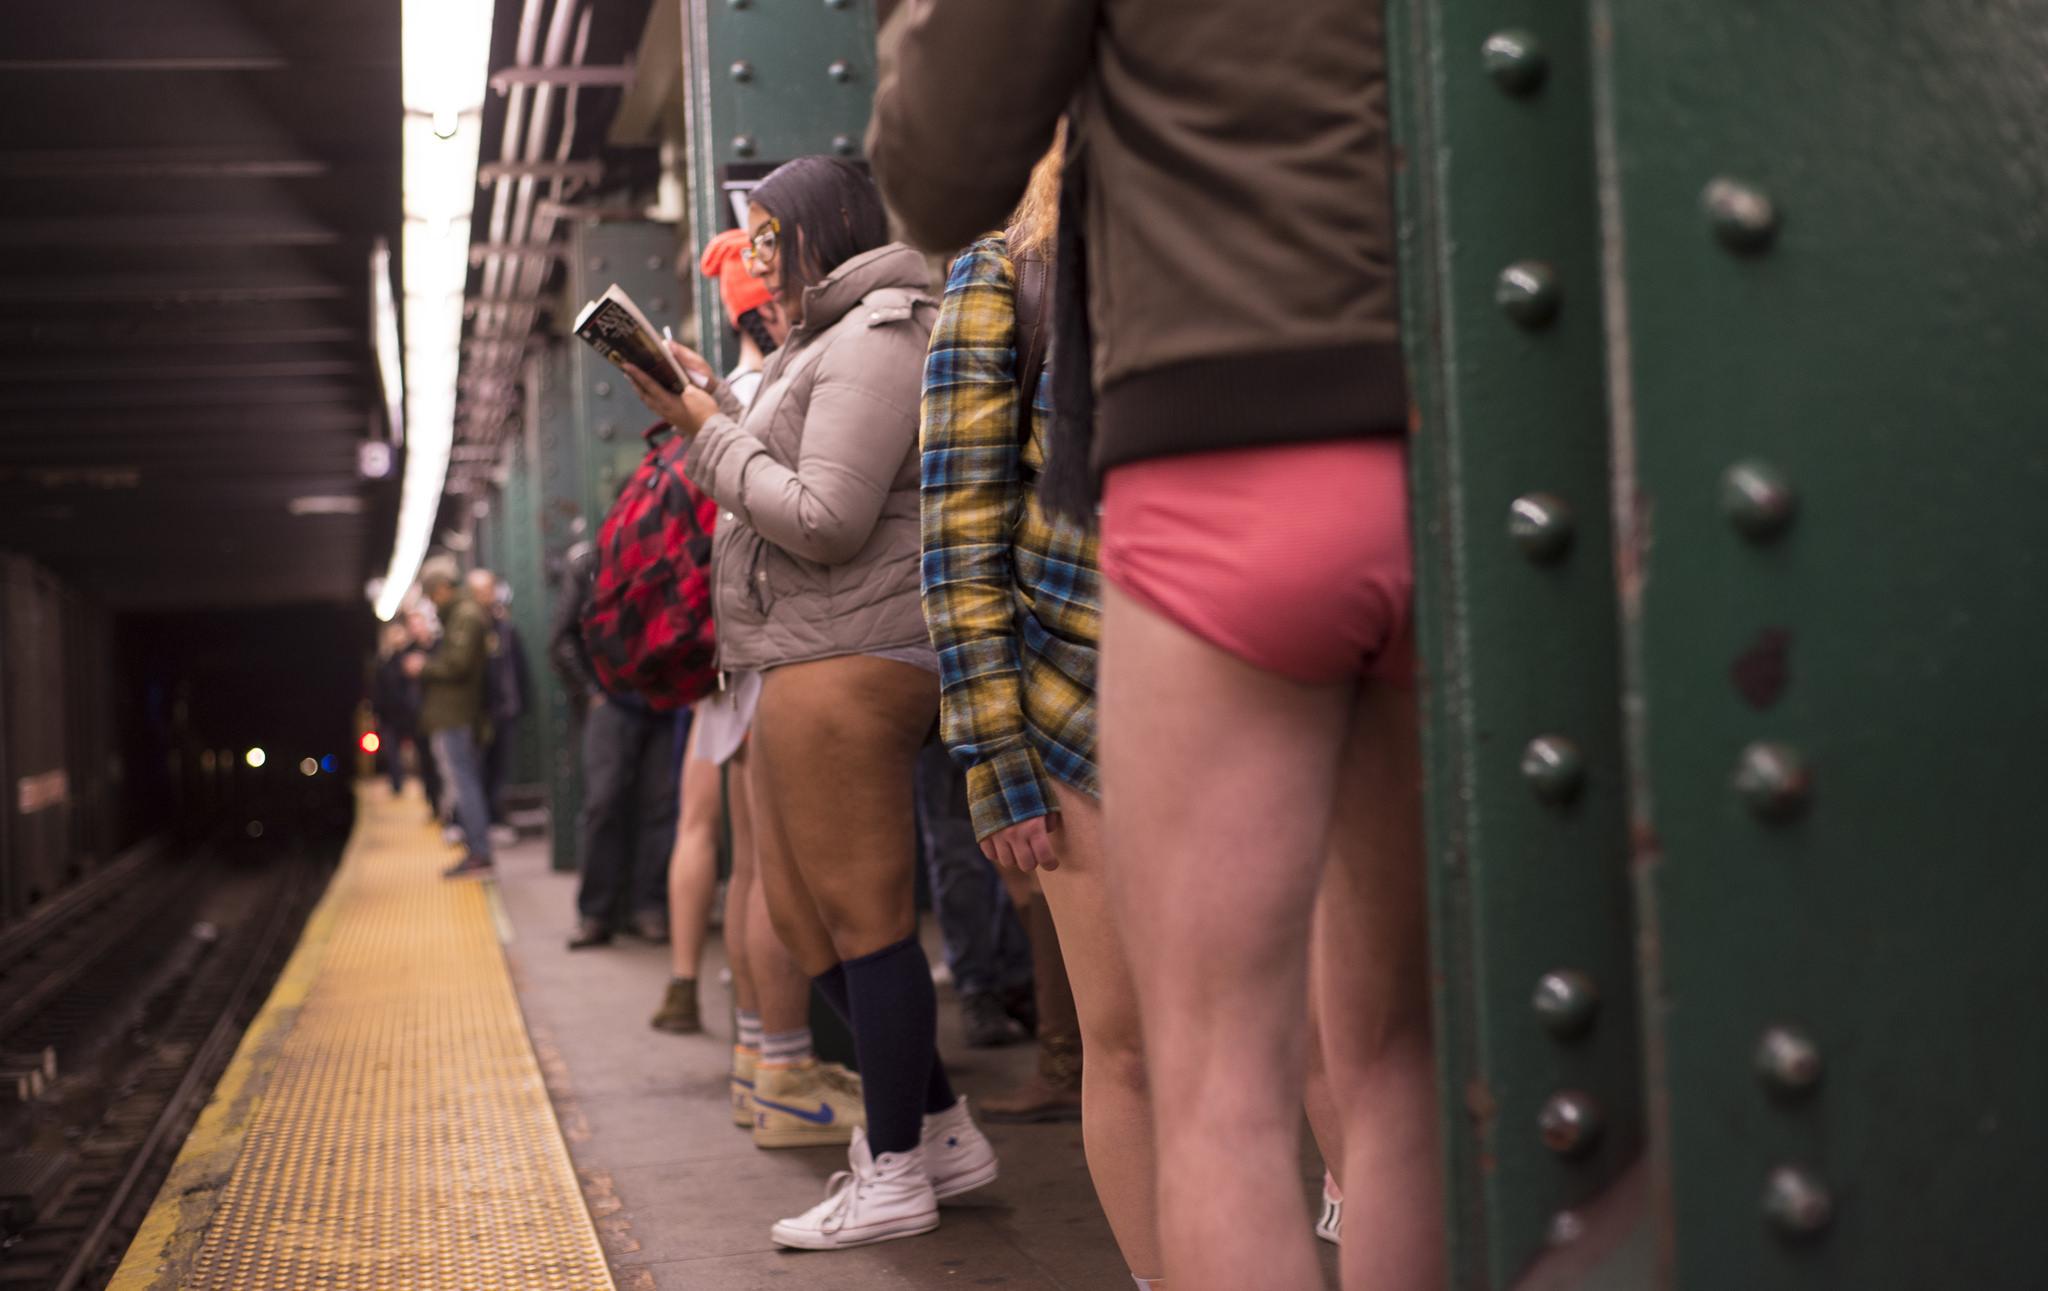 No Pants Subway Ride 2016 in New York City (Jessica Fejos / Flickr)